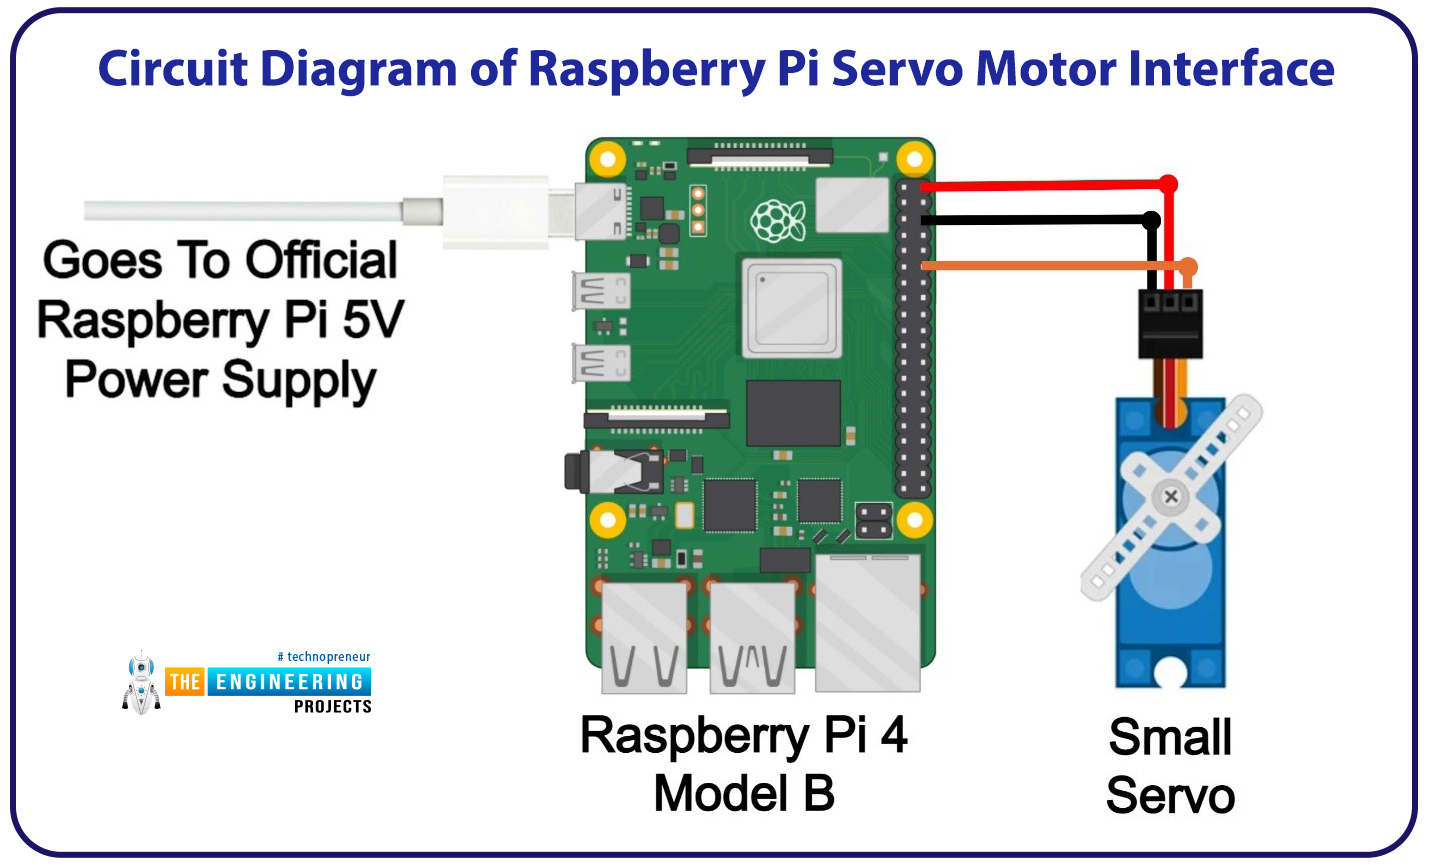 Control Servo Motor with Raspberry Pi 4 using Python, control servo motor with RPi4, servo motor Pi4, servo motor raspberry pi 4, raspberry pi 4 servo motor, pi 4 servo, servo pi4